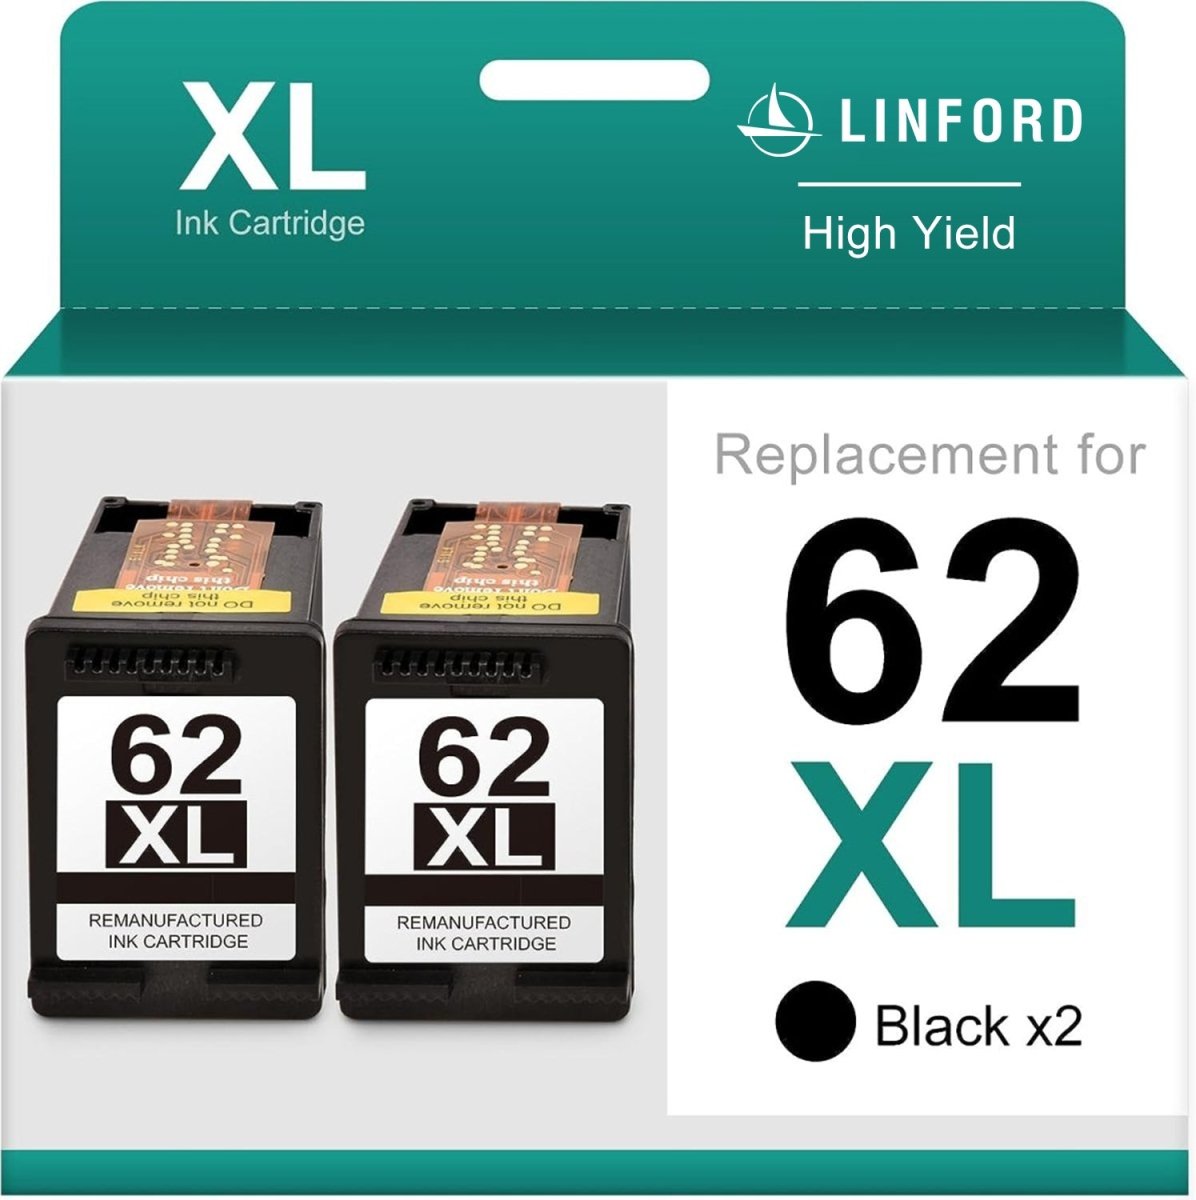 Remanufactured HP 62XL Ink Cartridge LEMERO (2 Black) - Linford Office:Printer Ink & Toner Cartridge